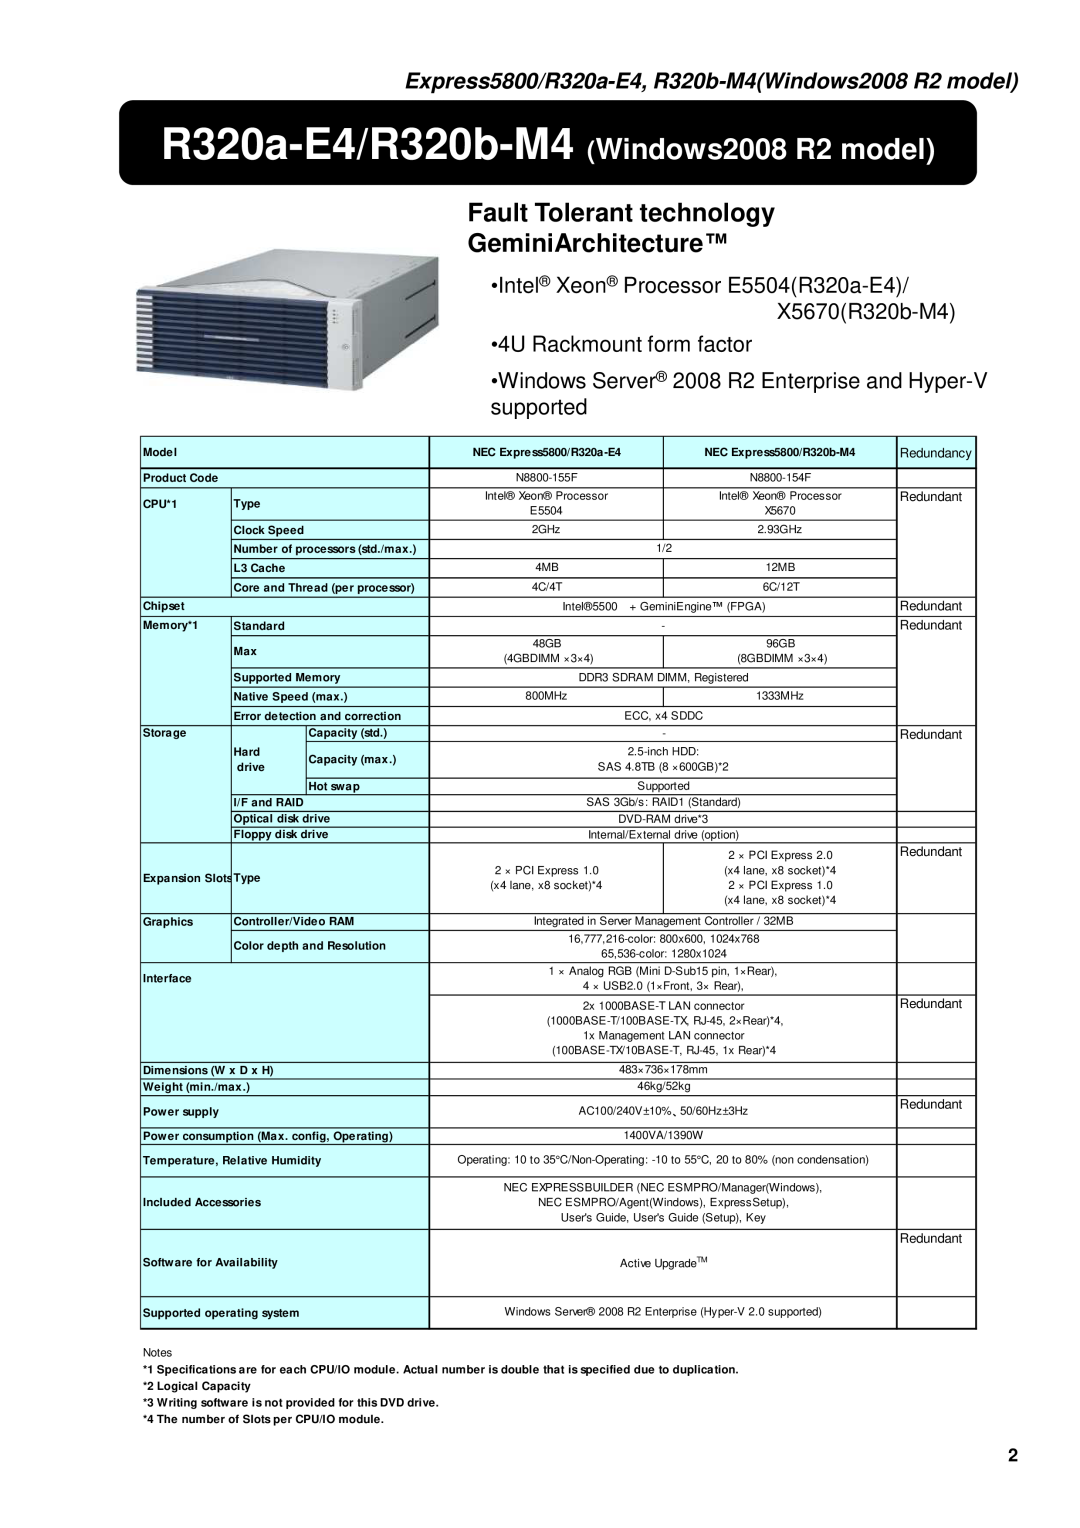 NEC R320B-M4, R320A-E4 R320a-E4/R320b-M4 Windows2008 R2 model, Fault Tolerant technology GeminiArchitecture, Redundant 